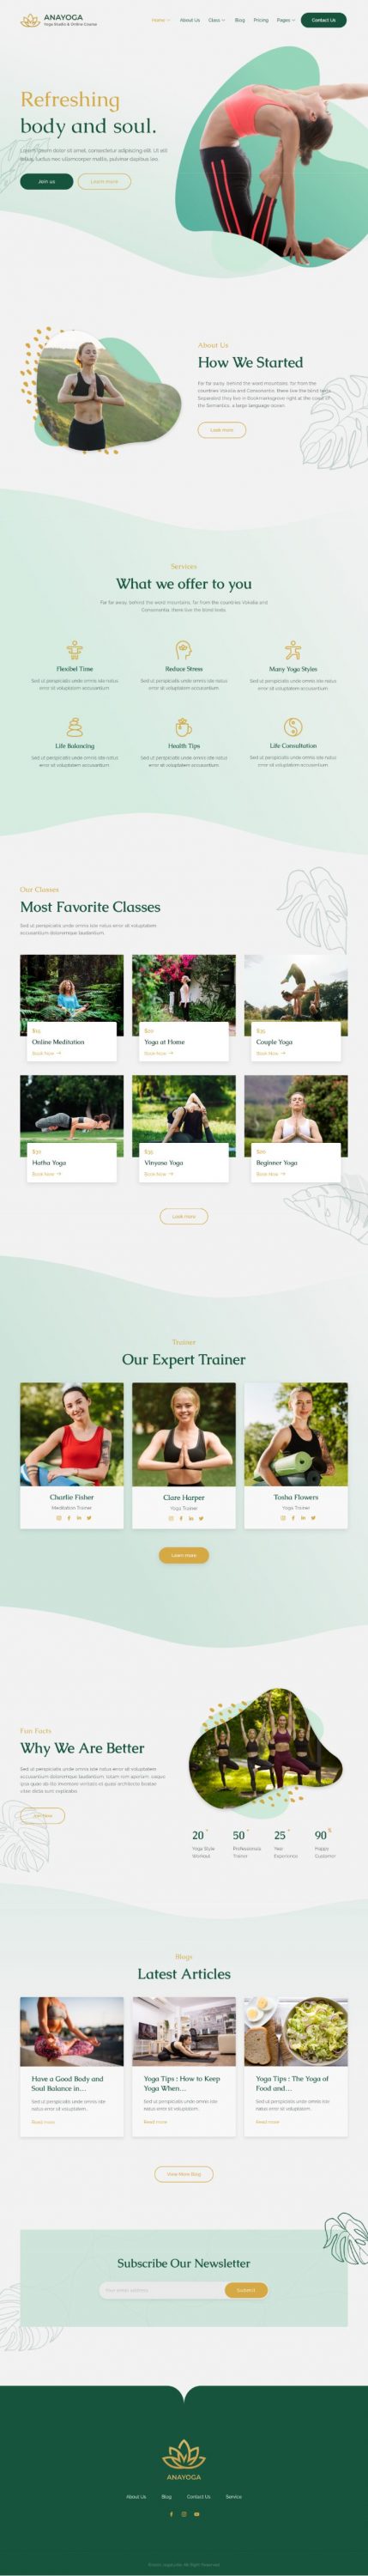 Mẫu website dịch vụ trung tâm yoga - Anayoga